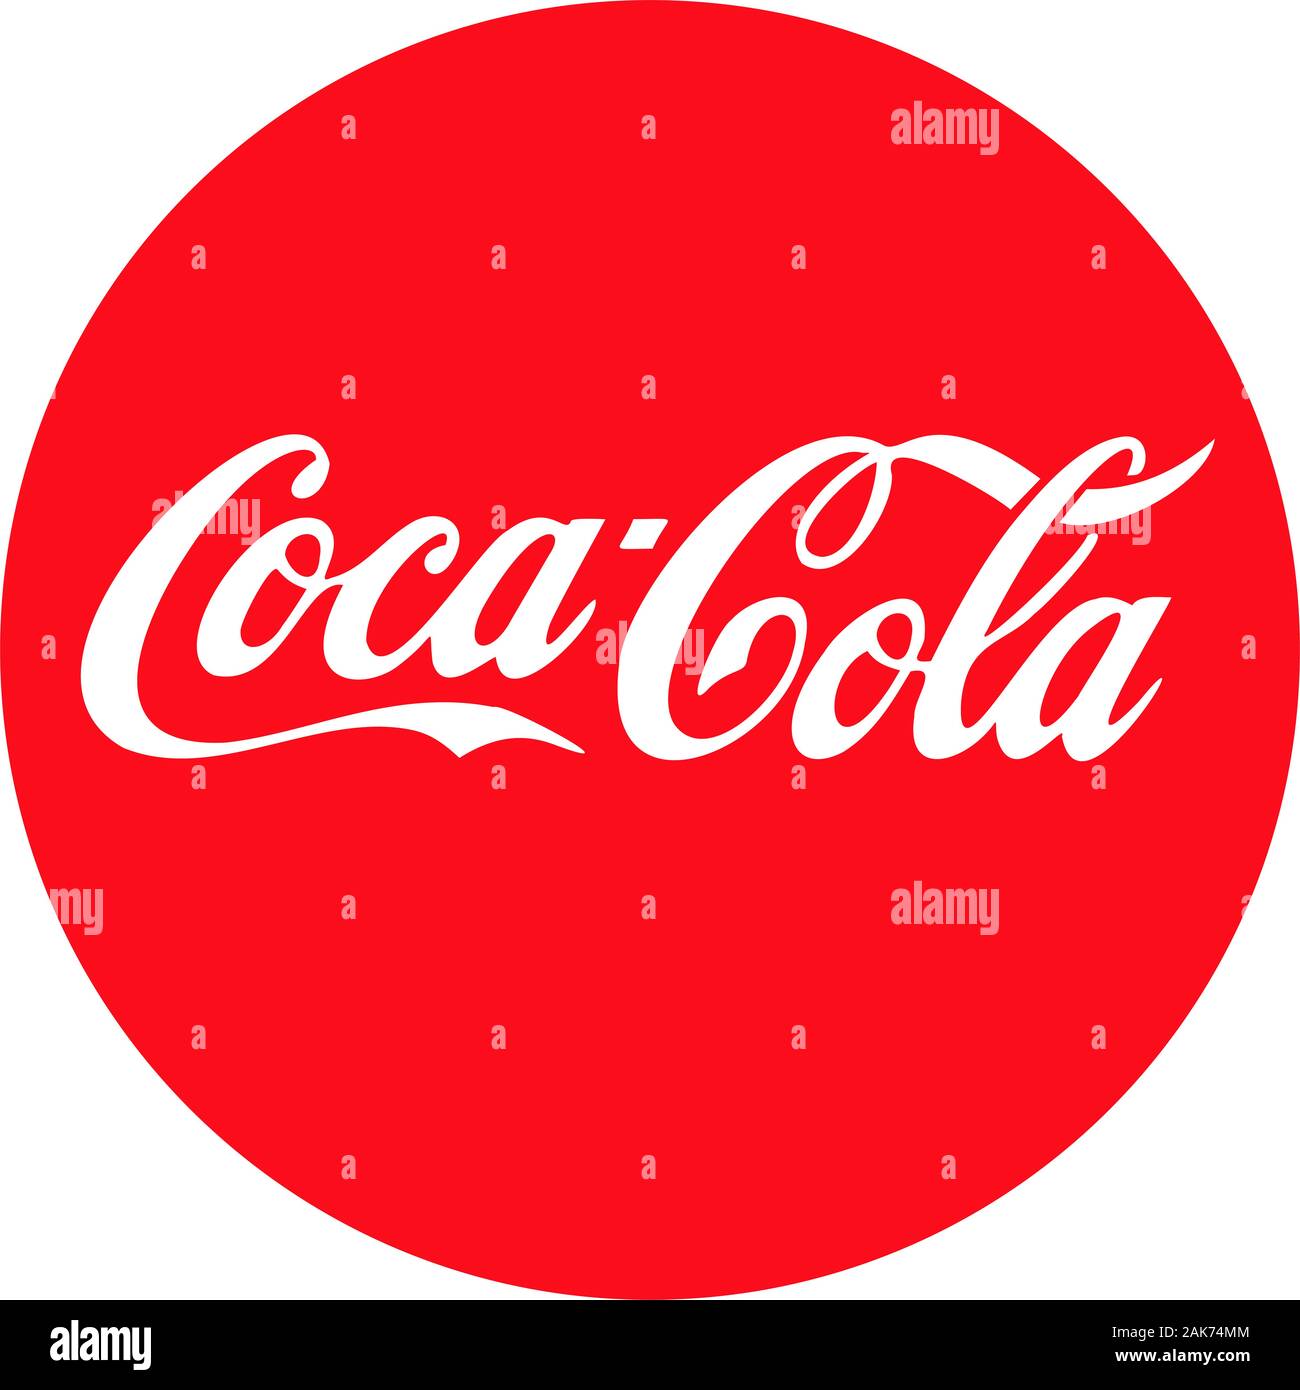 Coca-Cola logo Stock Photo